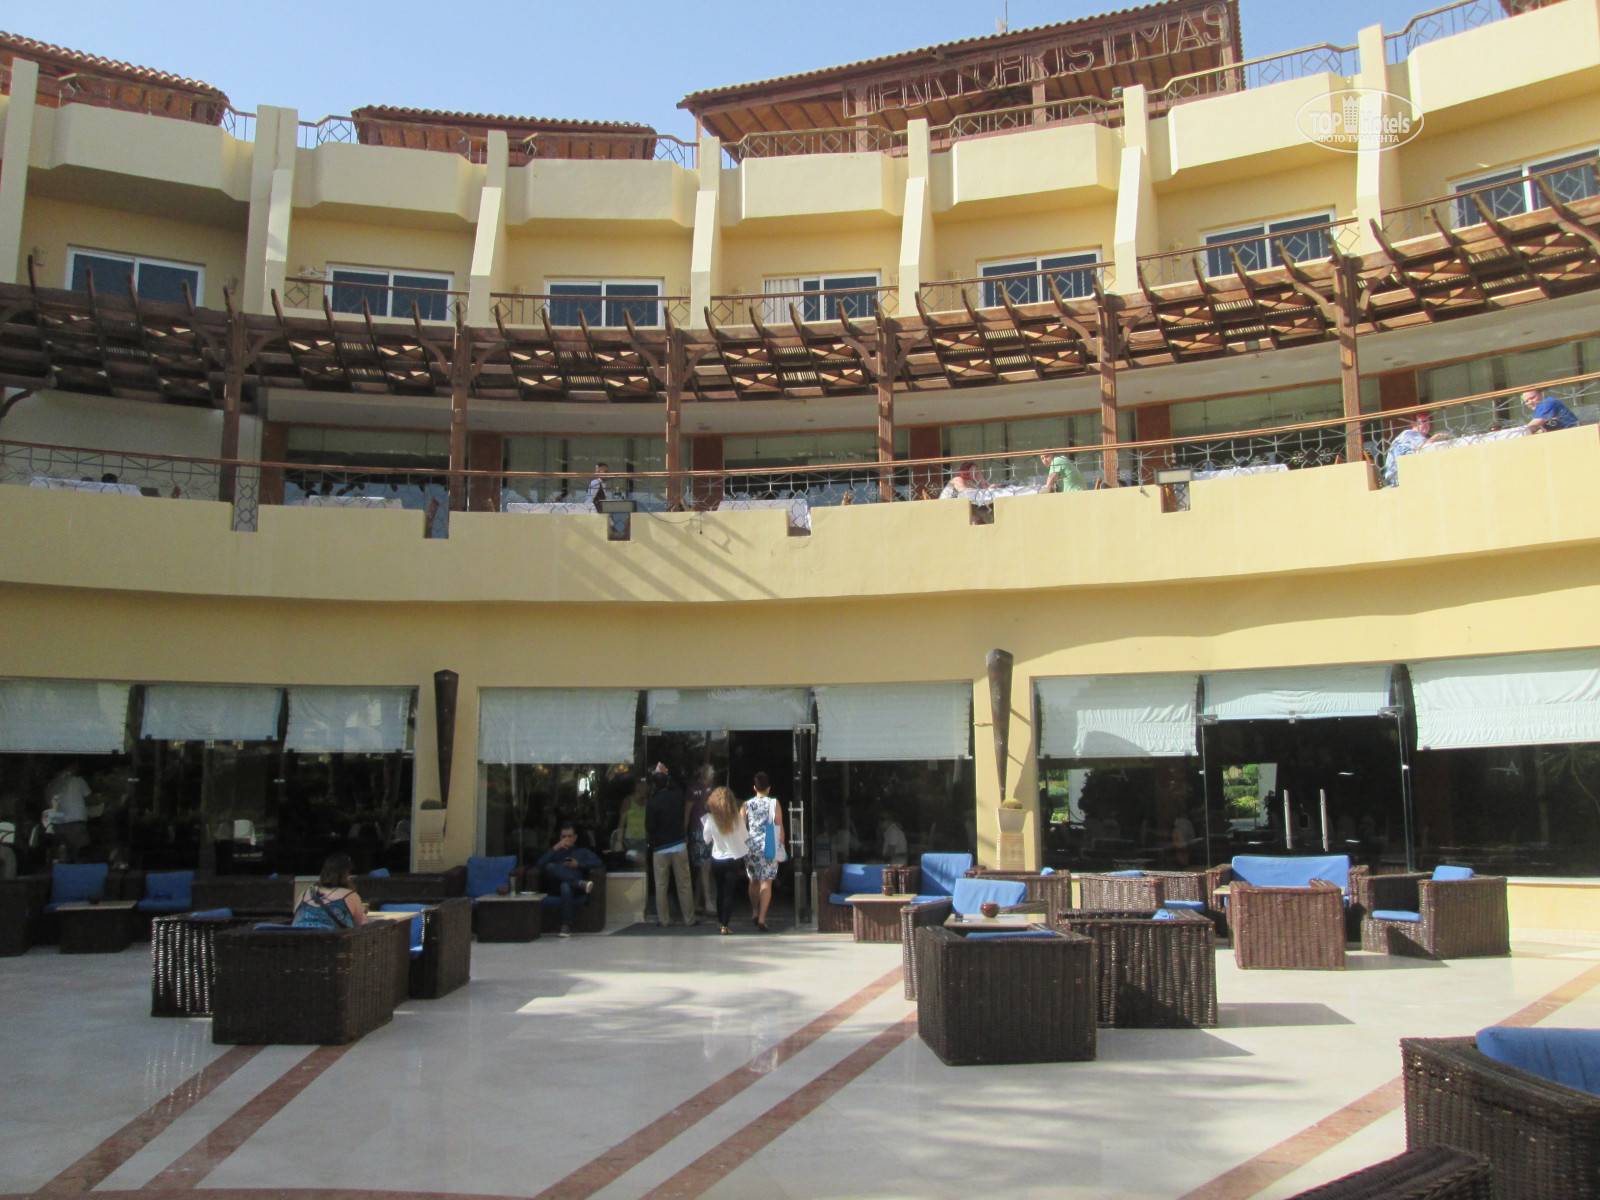 Amwaj beach club resort